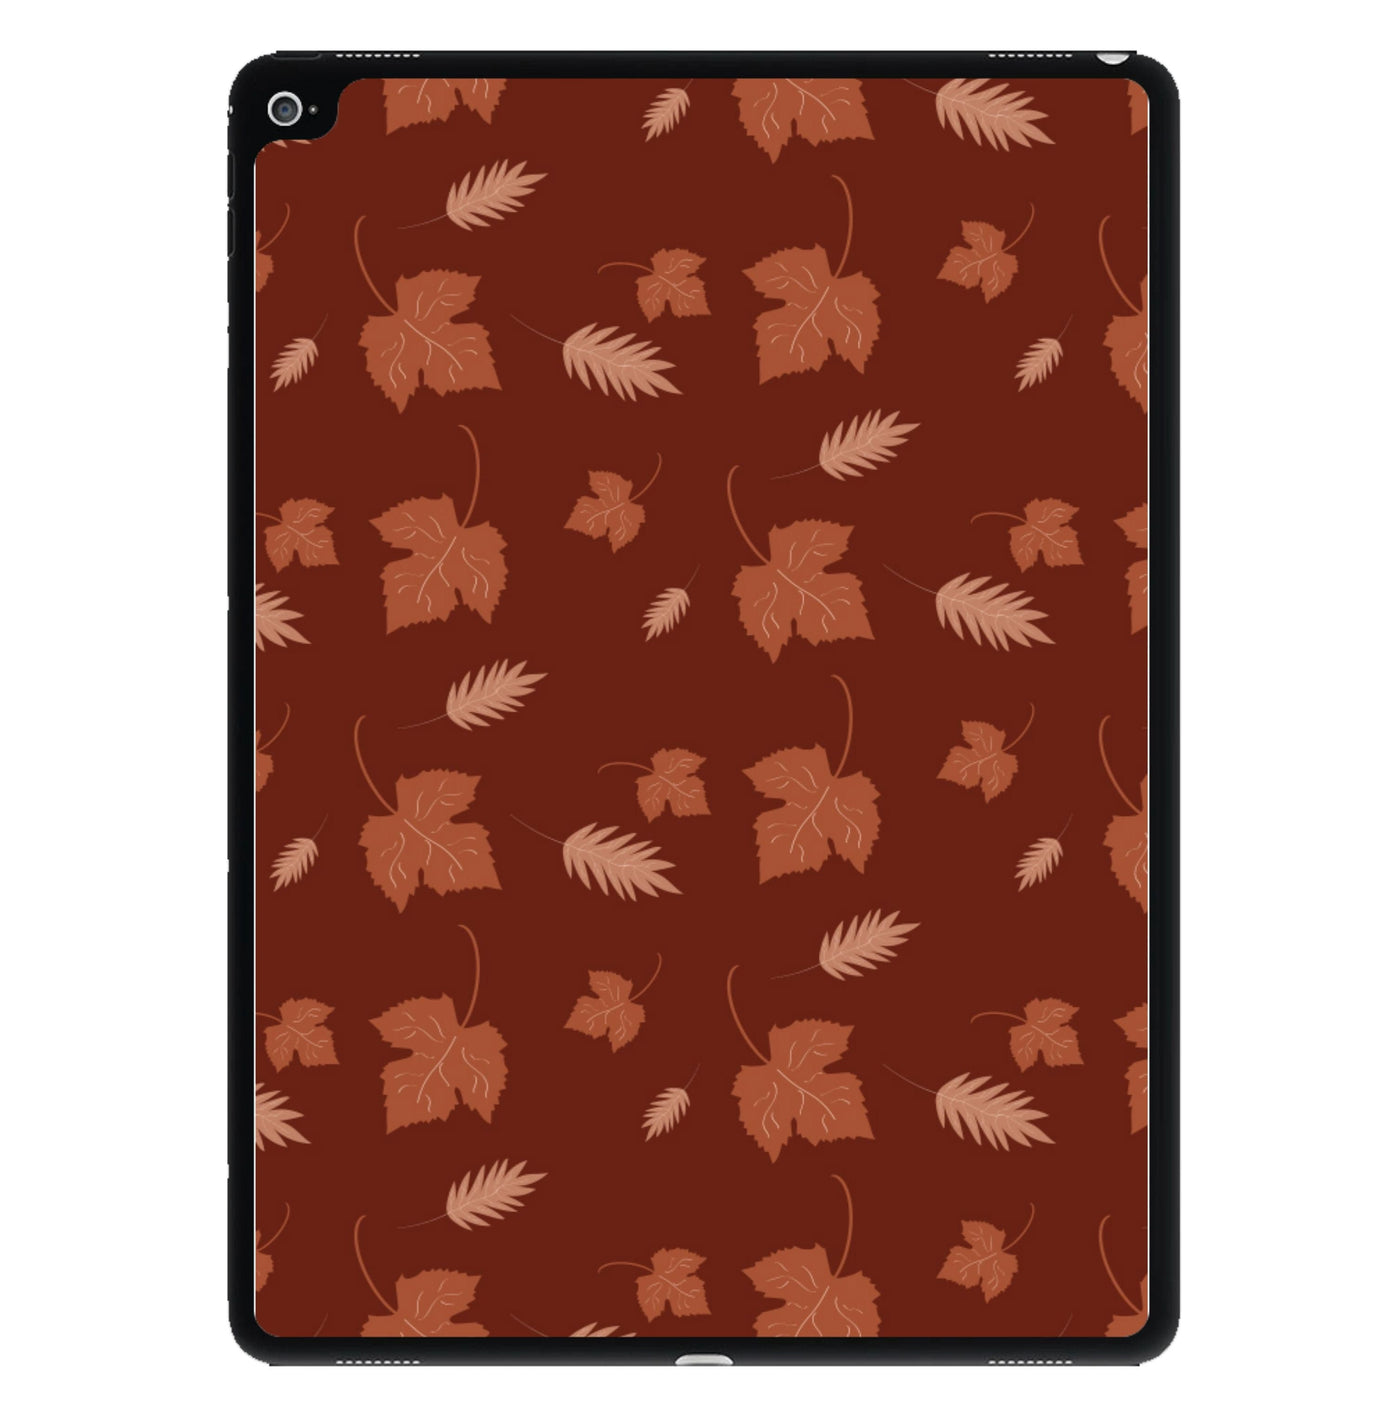 Autumn Leaf Patterns iPad Case